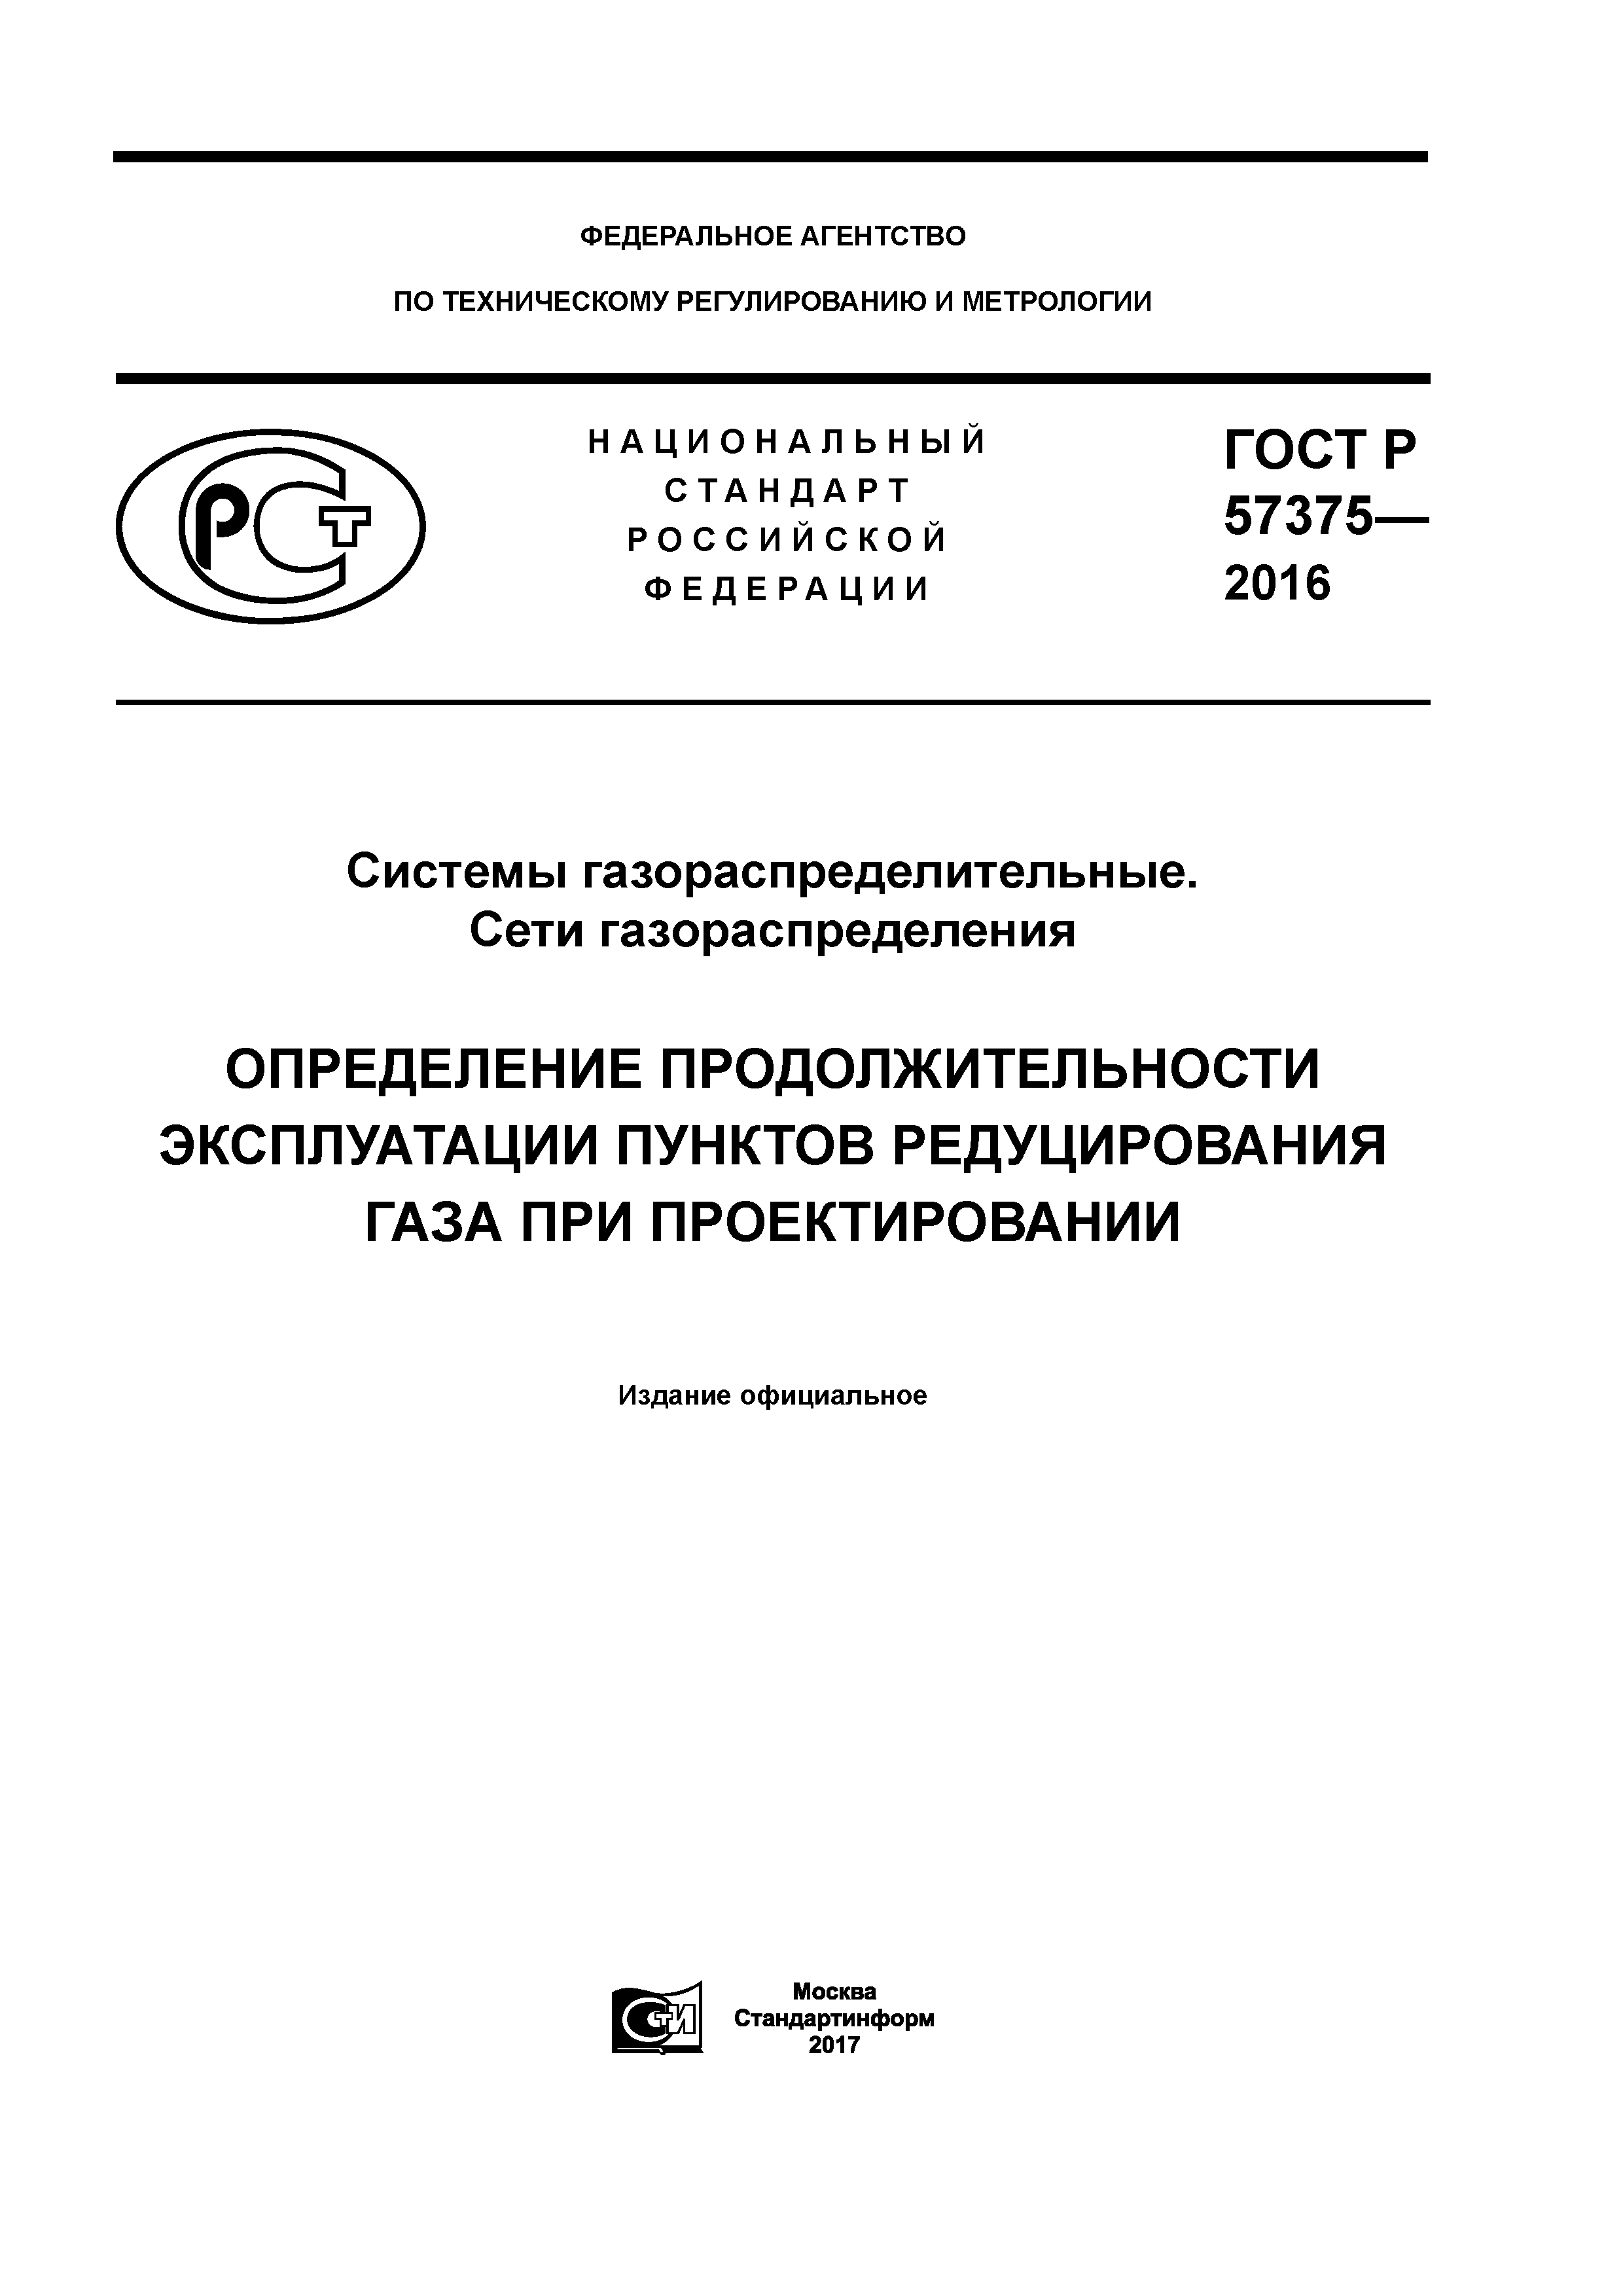 ГОСТ Р 57375-2016